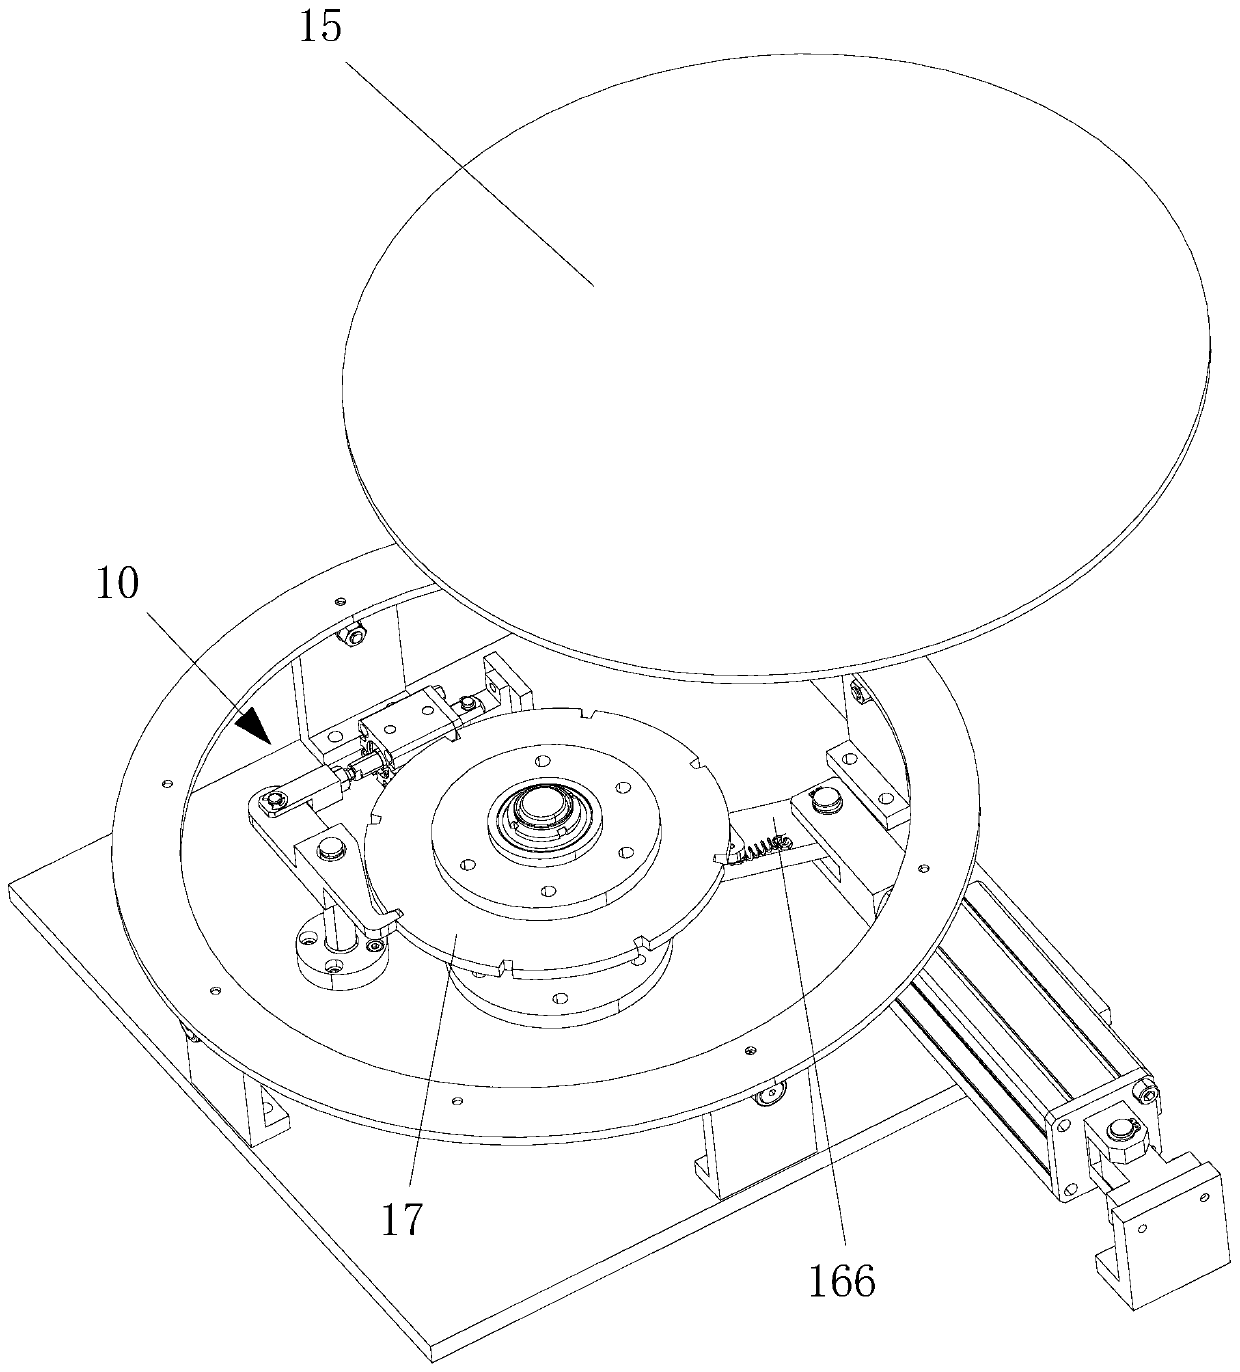 Ratchet wheel transmission type dispensing system for SMT mounting